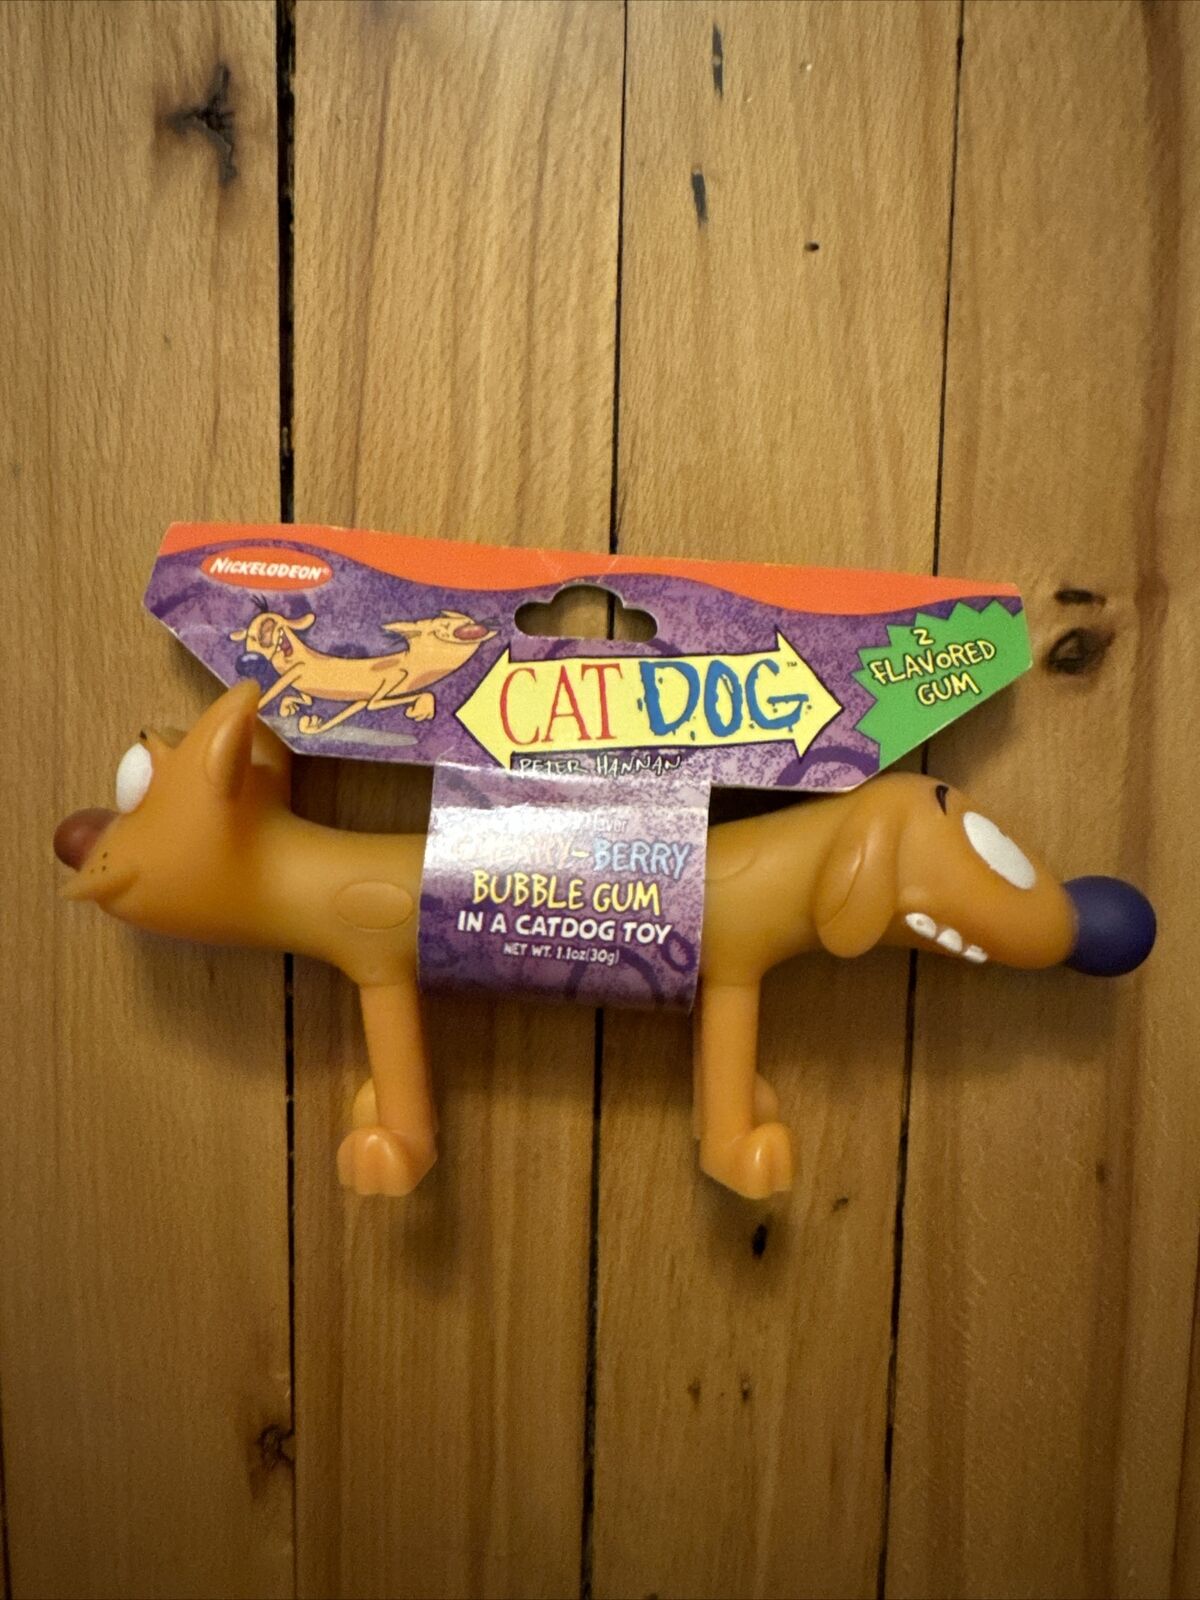 1999 Viacom Nickelodeon Catdog Bubble Gum Cat Dog Plastic Toy Peter Hannan NEW